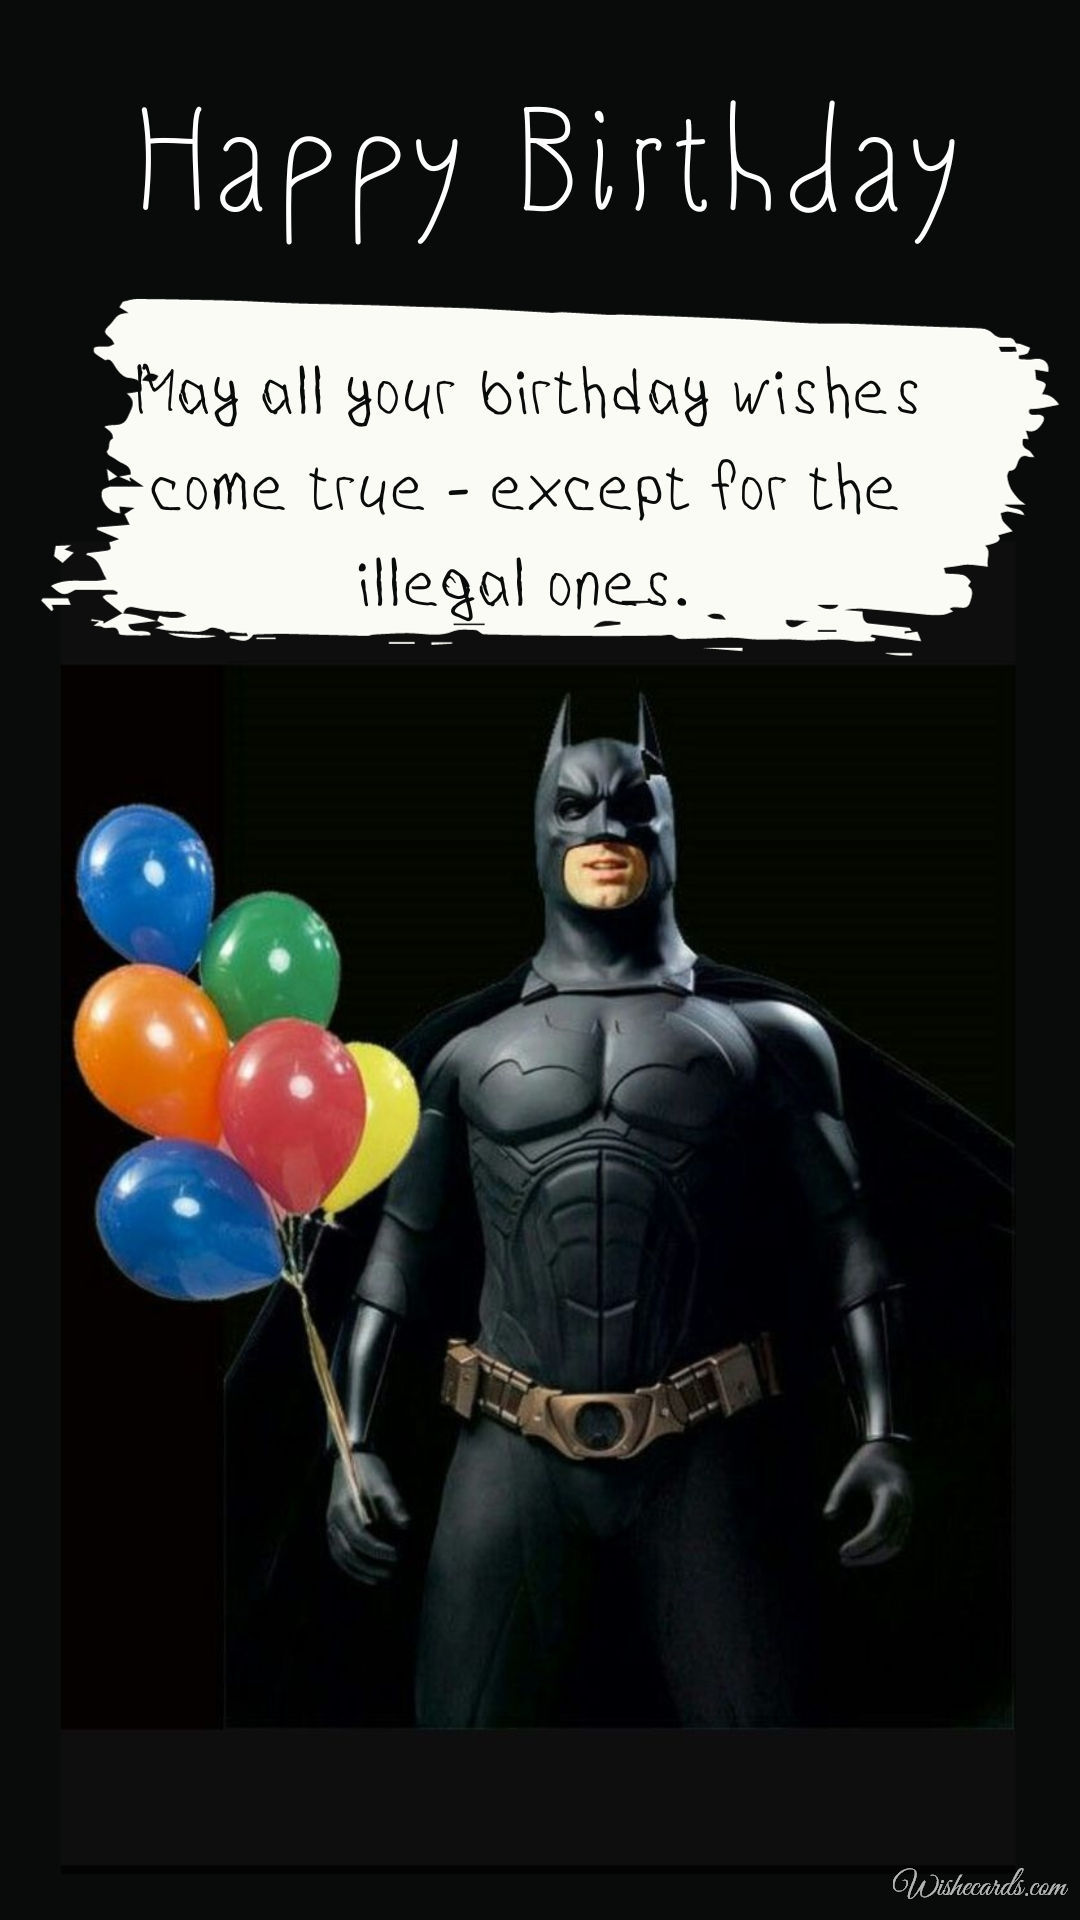 Happy Birthday Image with Batman